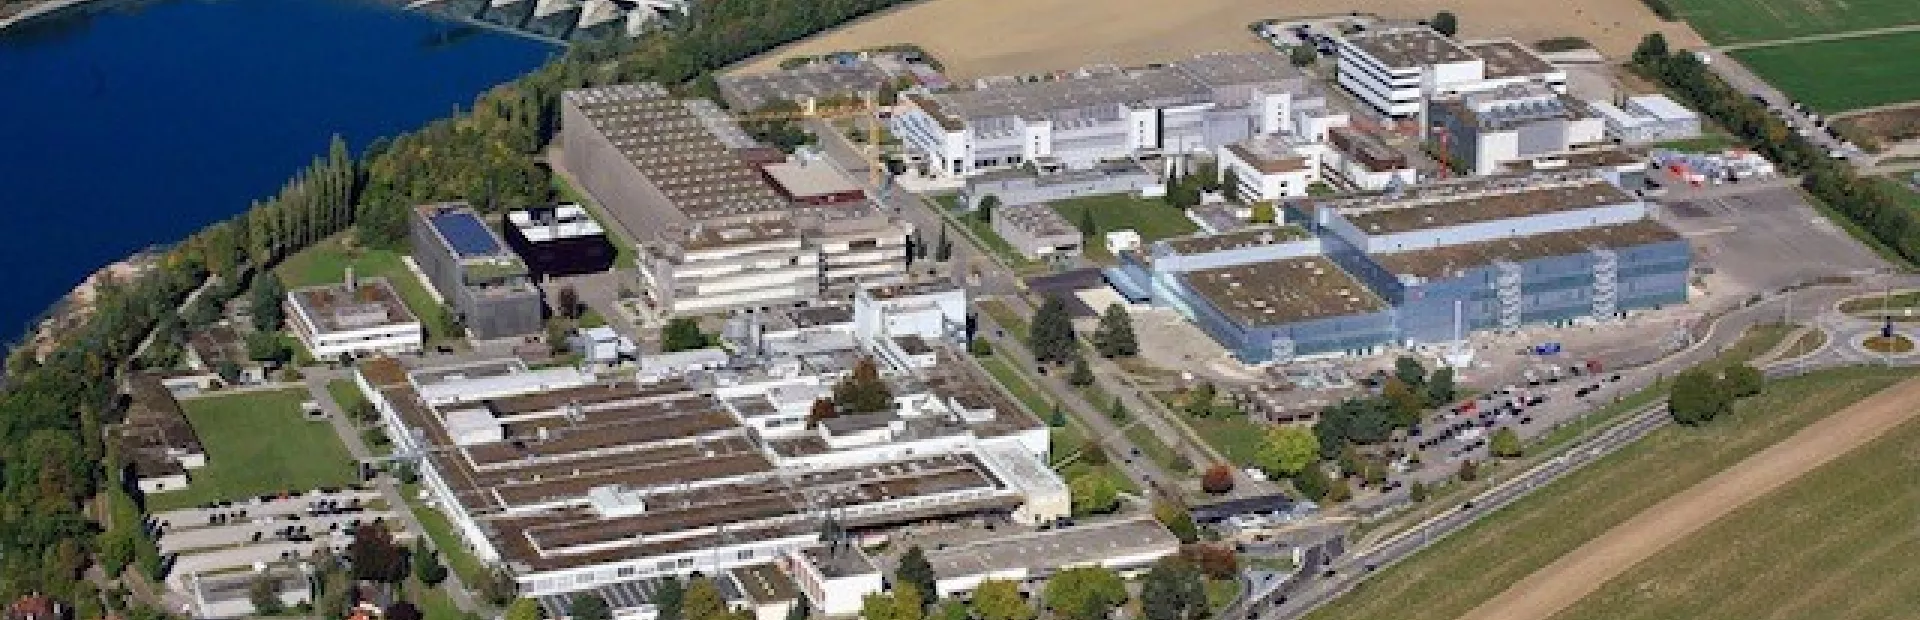 Novartis manufacturing site in Switzerland_0